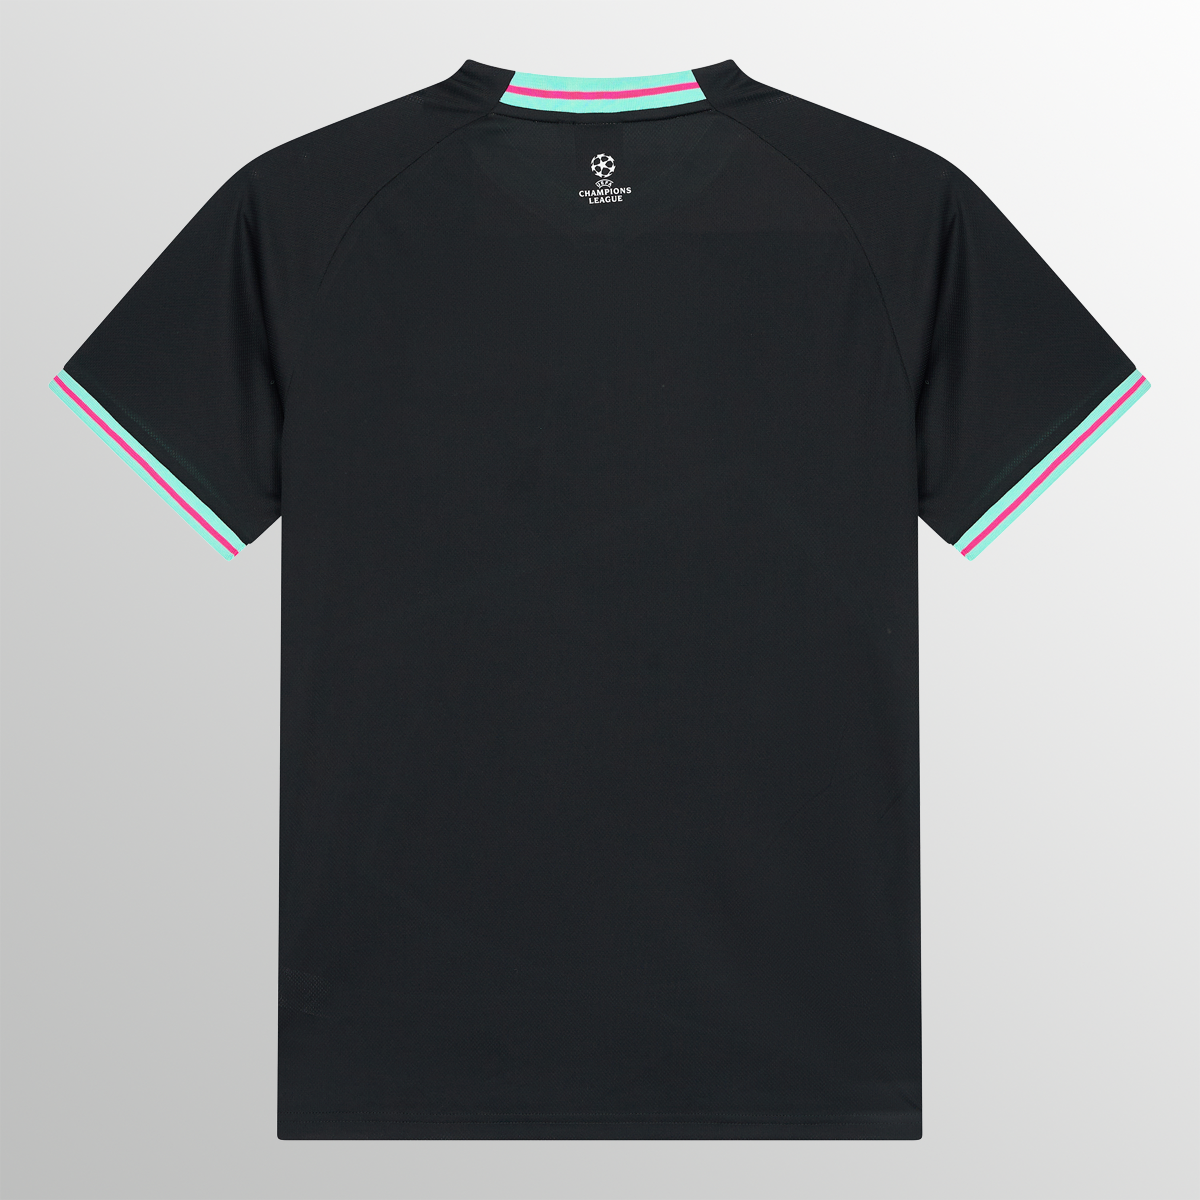 UEFA Champions League Black Performance T-shirt